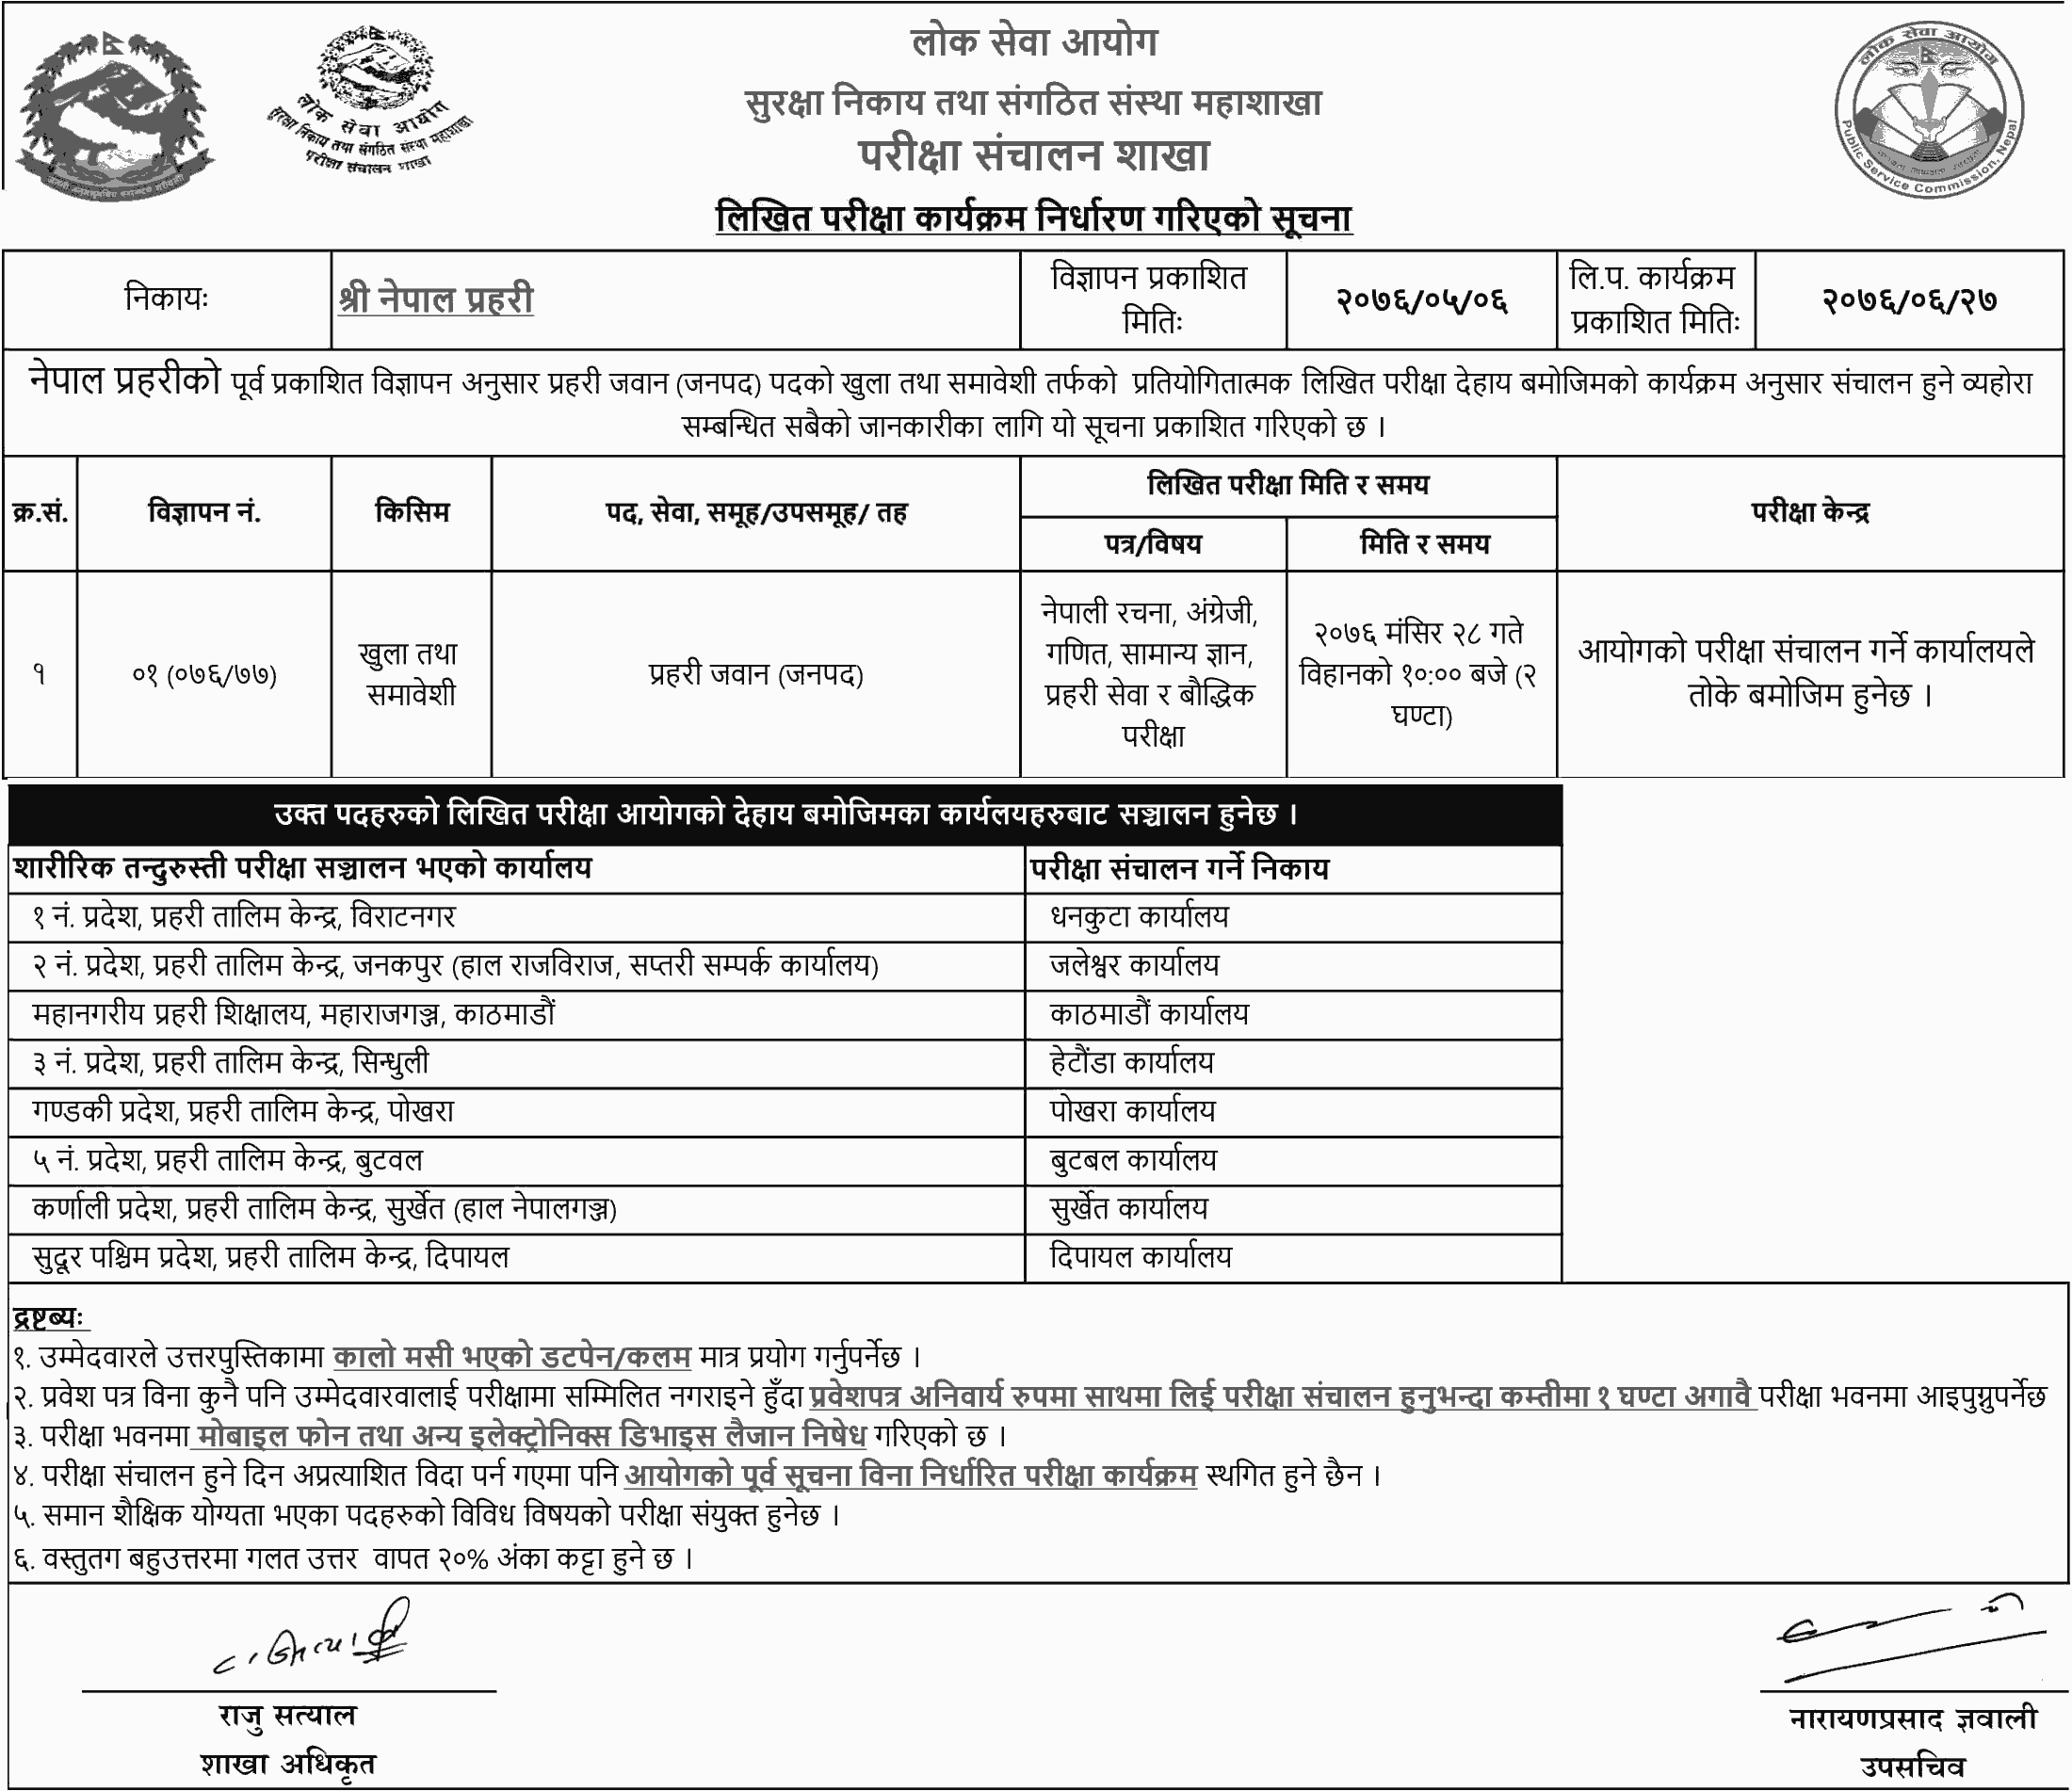 Nepal Police Jwan Post Written Exam Schedule and Examination Center